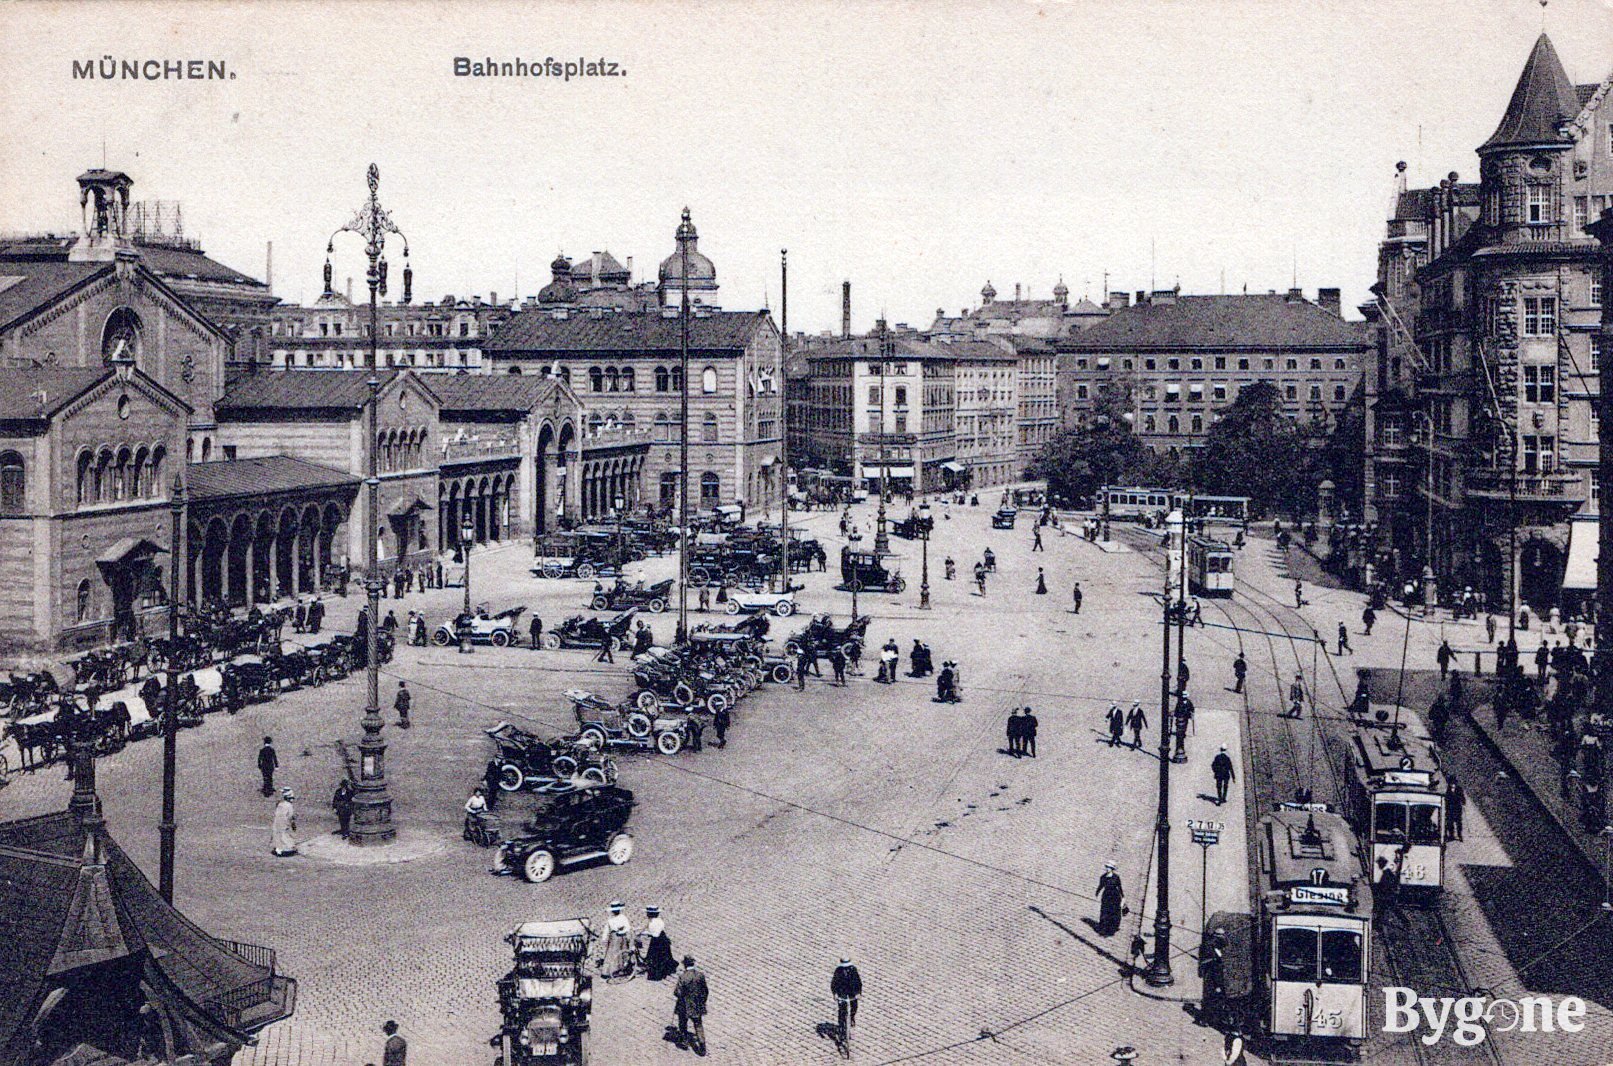 Munich, main train station and square (Munchen, Bahnhofsplatz, Hauptbahnhof)